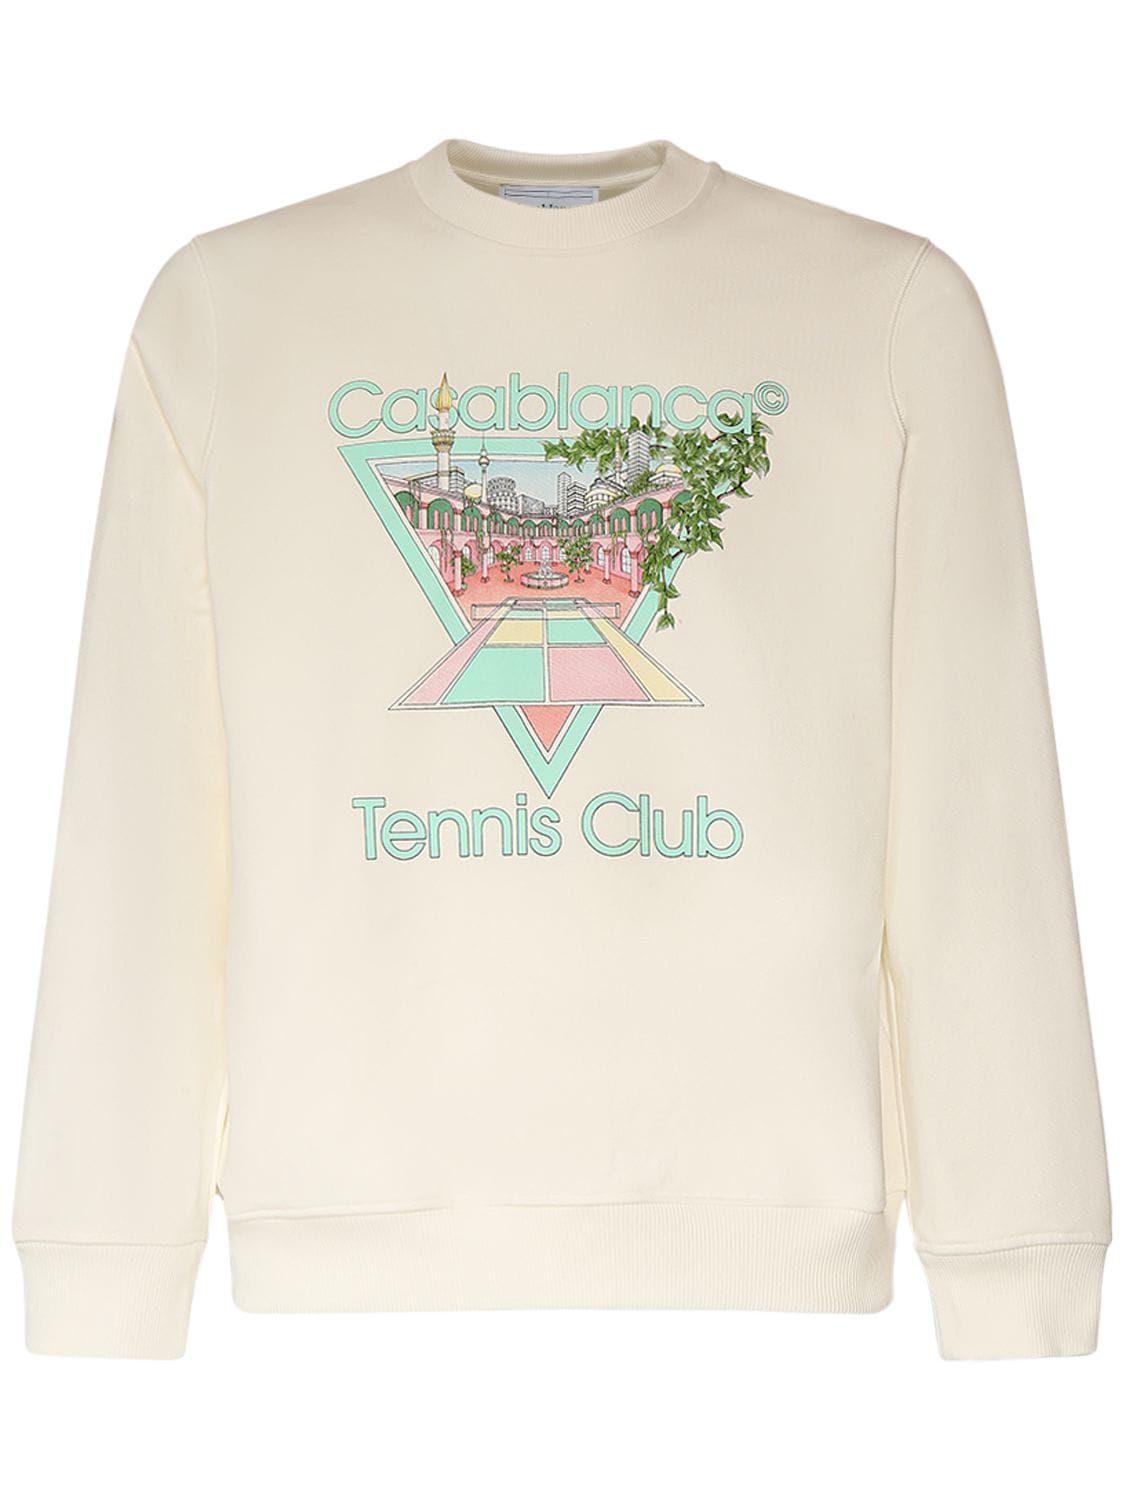 Image of Tennis Club Organic Cotton Sweatshirt